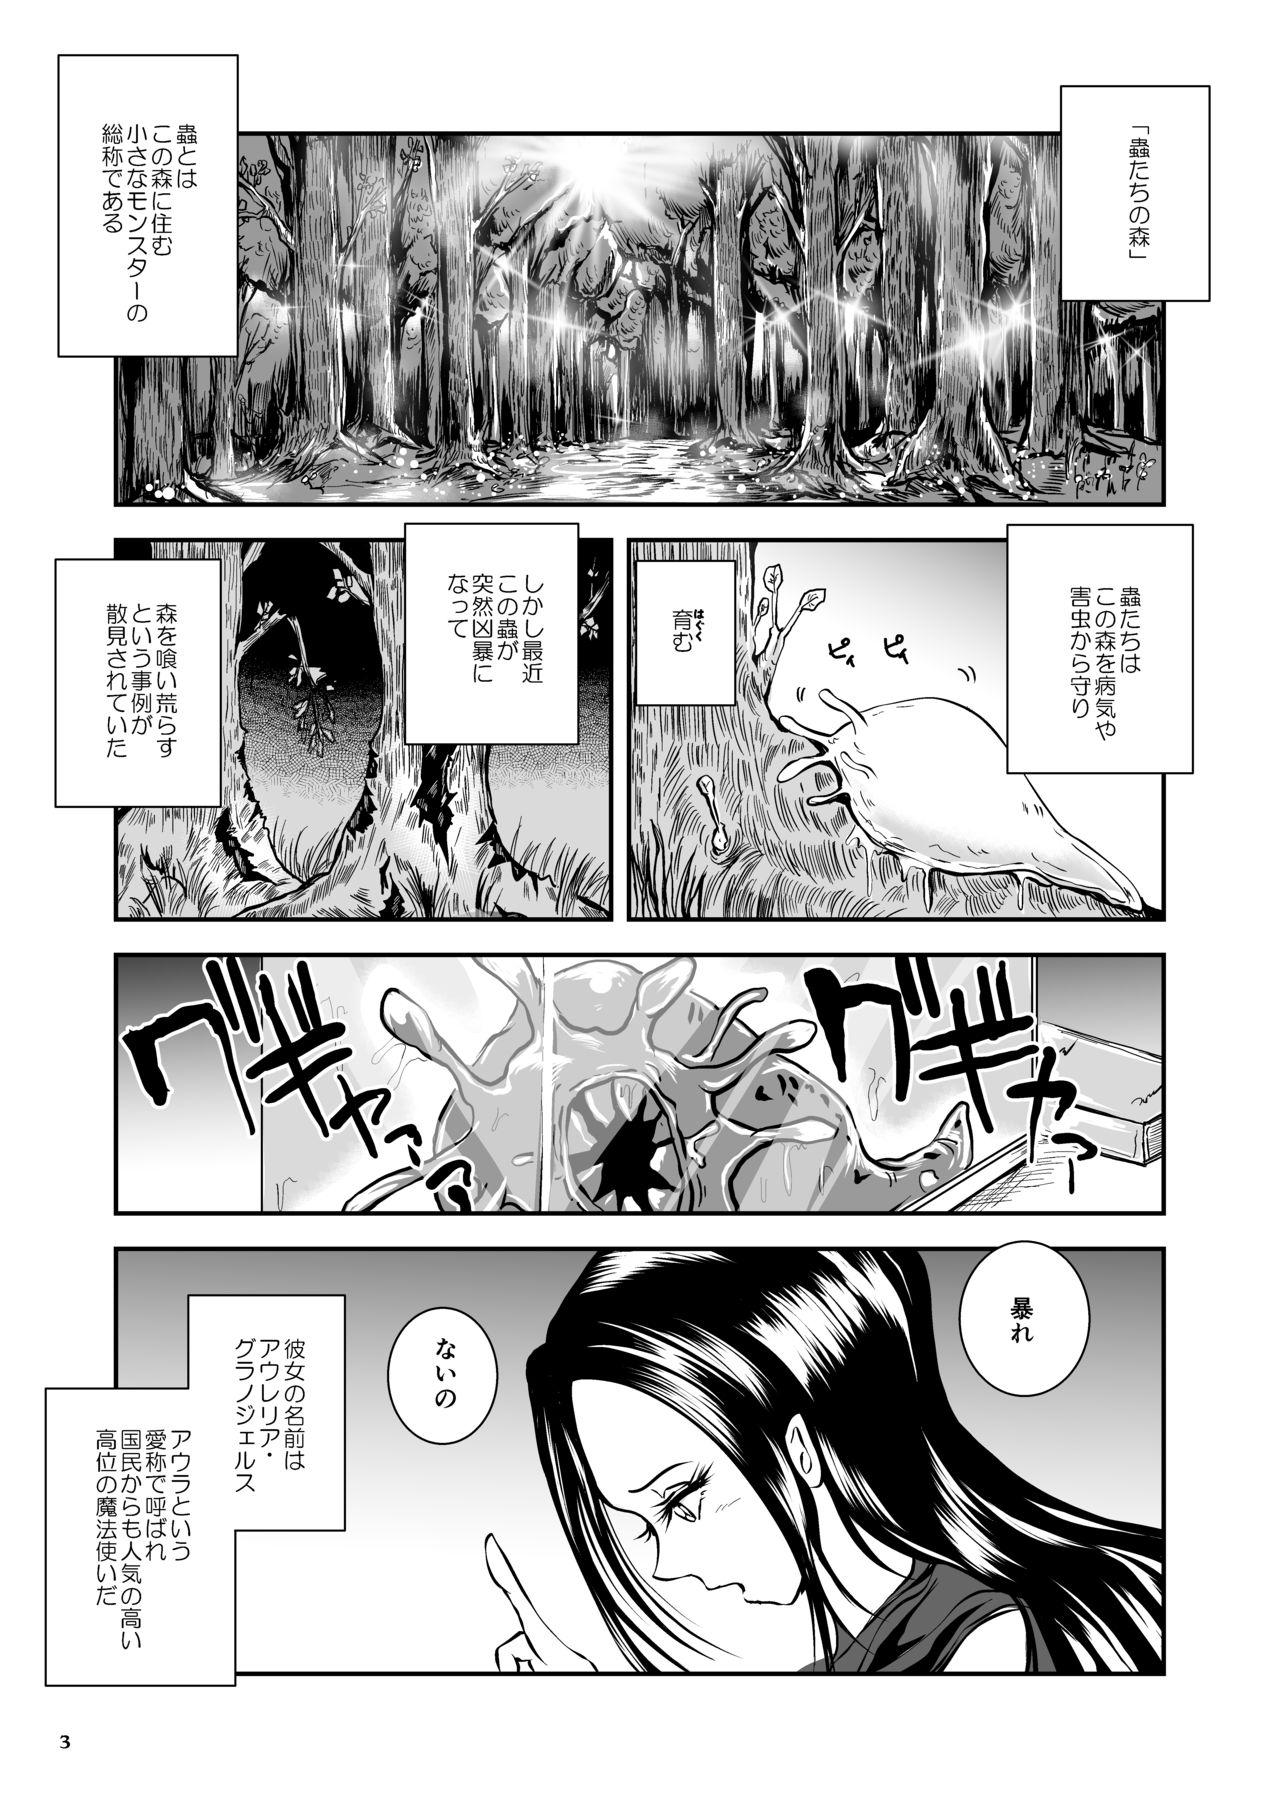 Facebook Oonamekuji to Kurokami no Mahoutsukai - Parasitized Giant Slugs V.S. Sorceress of the Black Hair as Aura Atm - Page 3